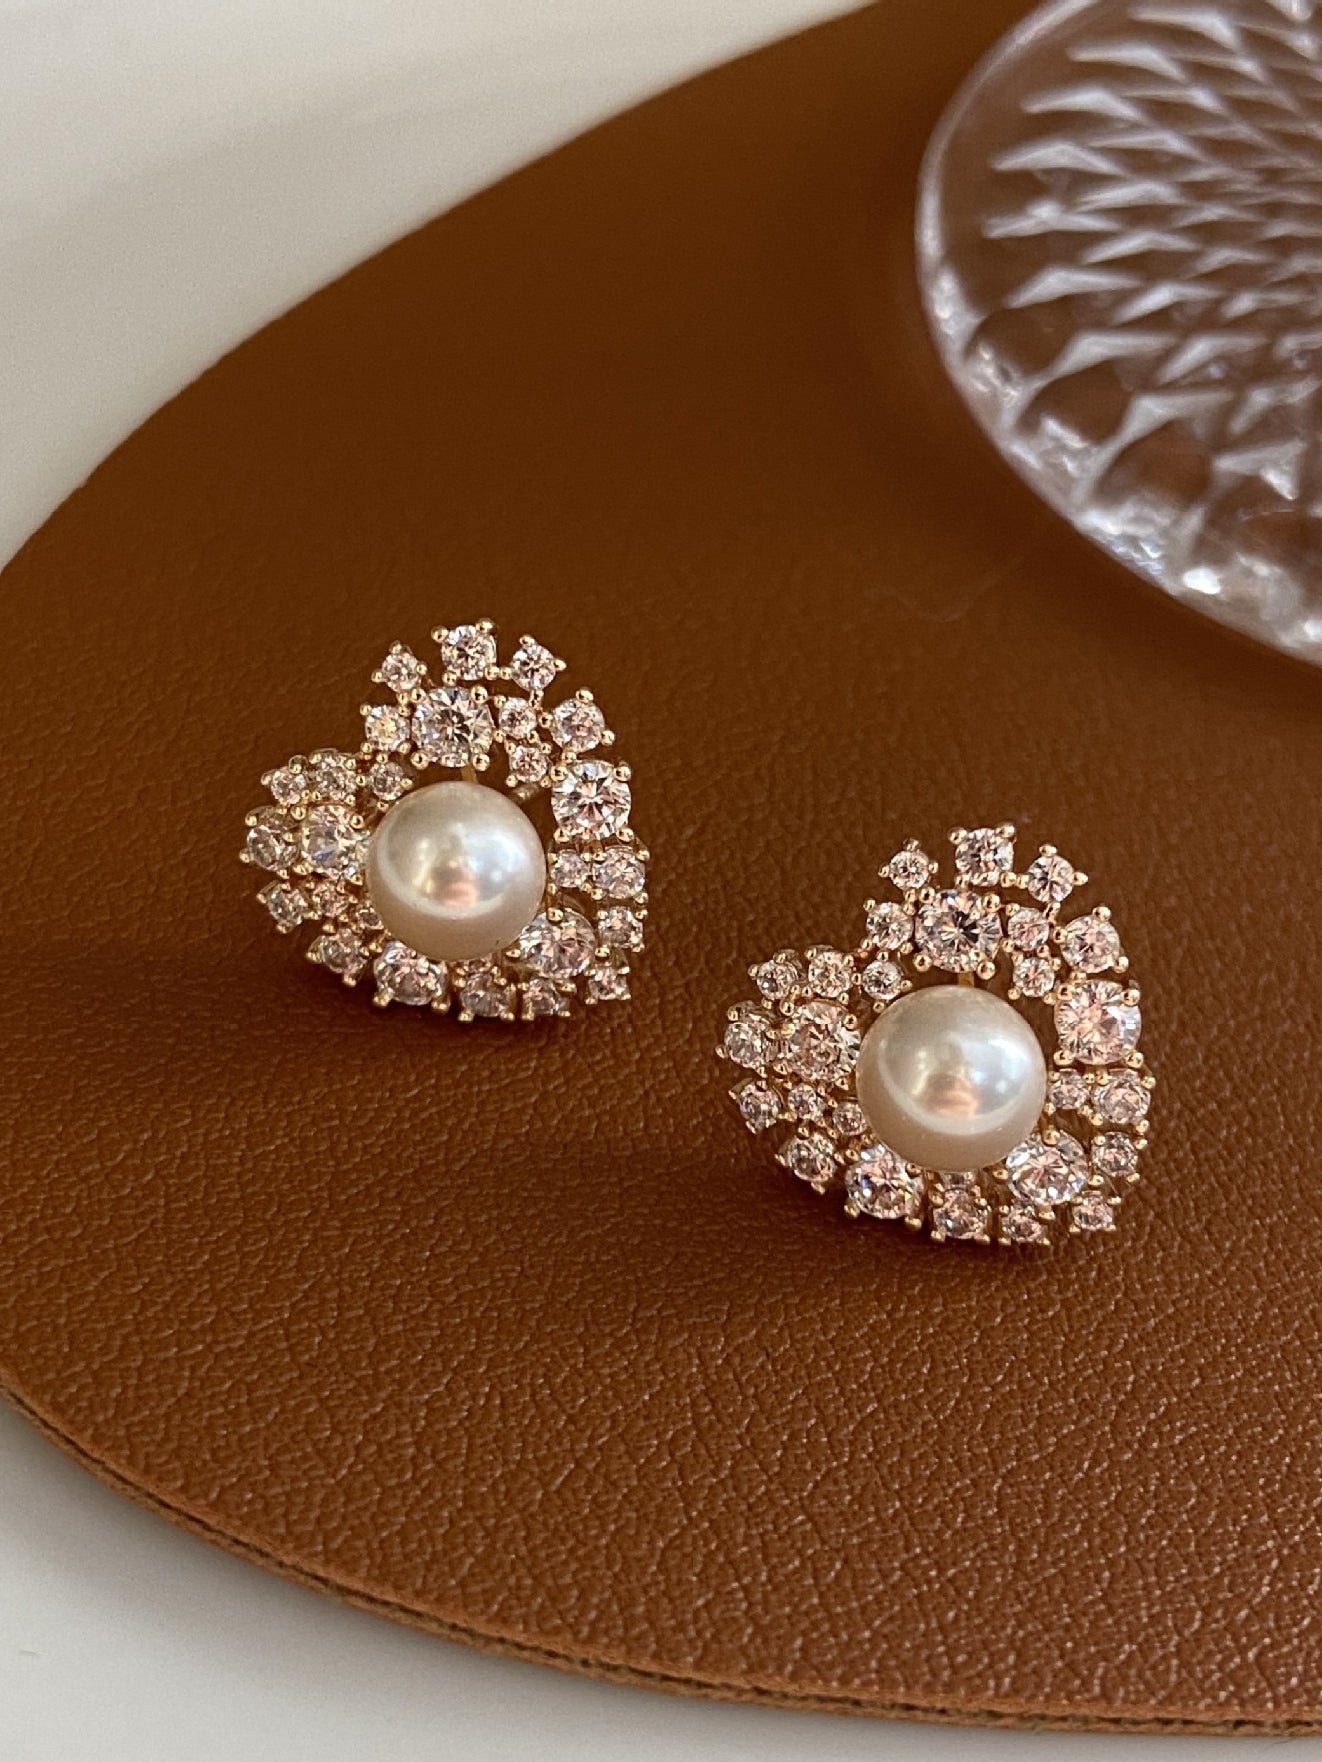 Heart Shaped Diamond Inlaid Pearl Earrings